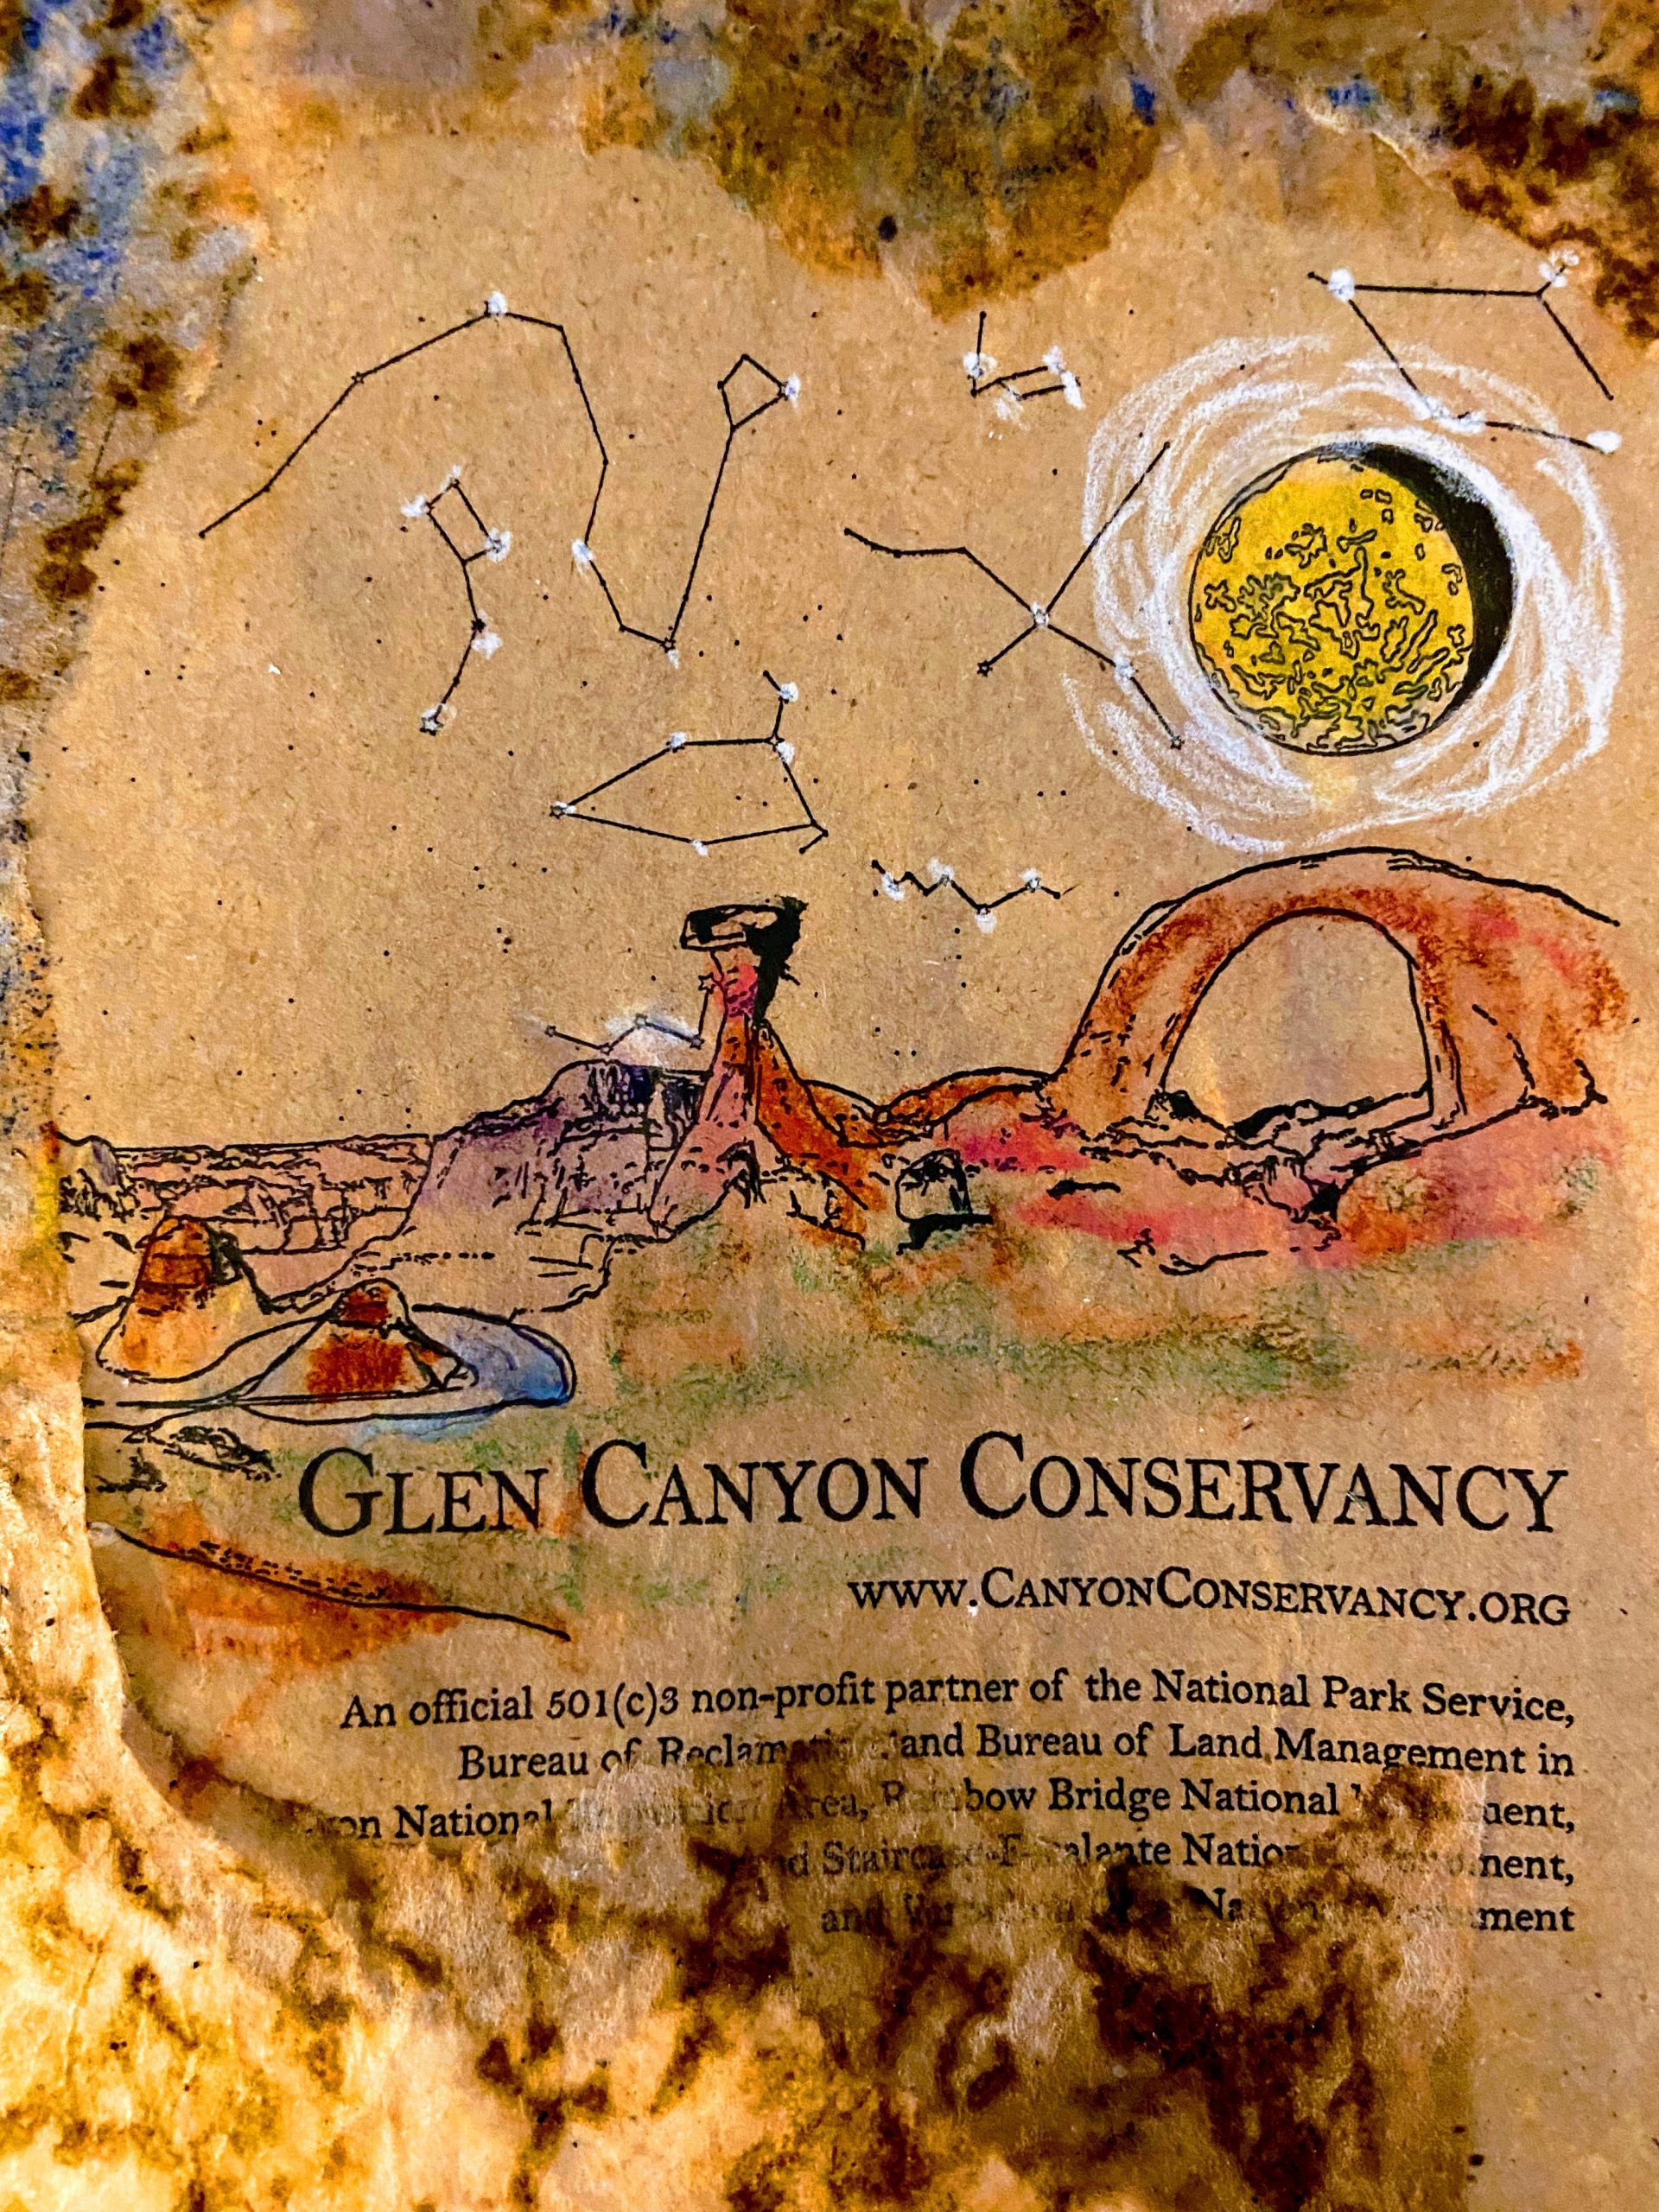 Mixed Media Collage of Glen Canyon Landmarks